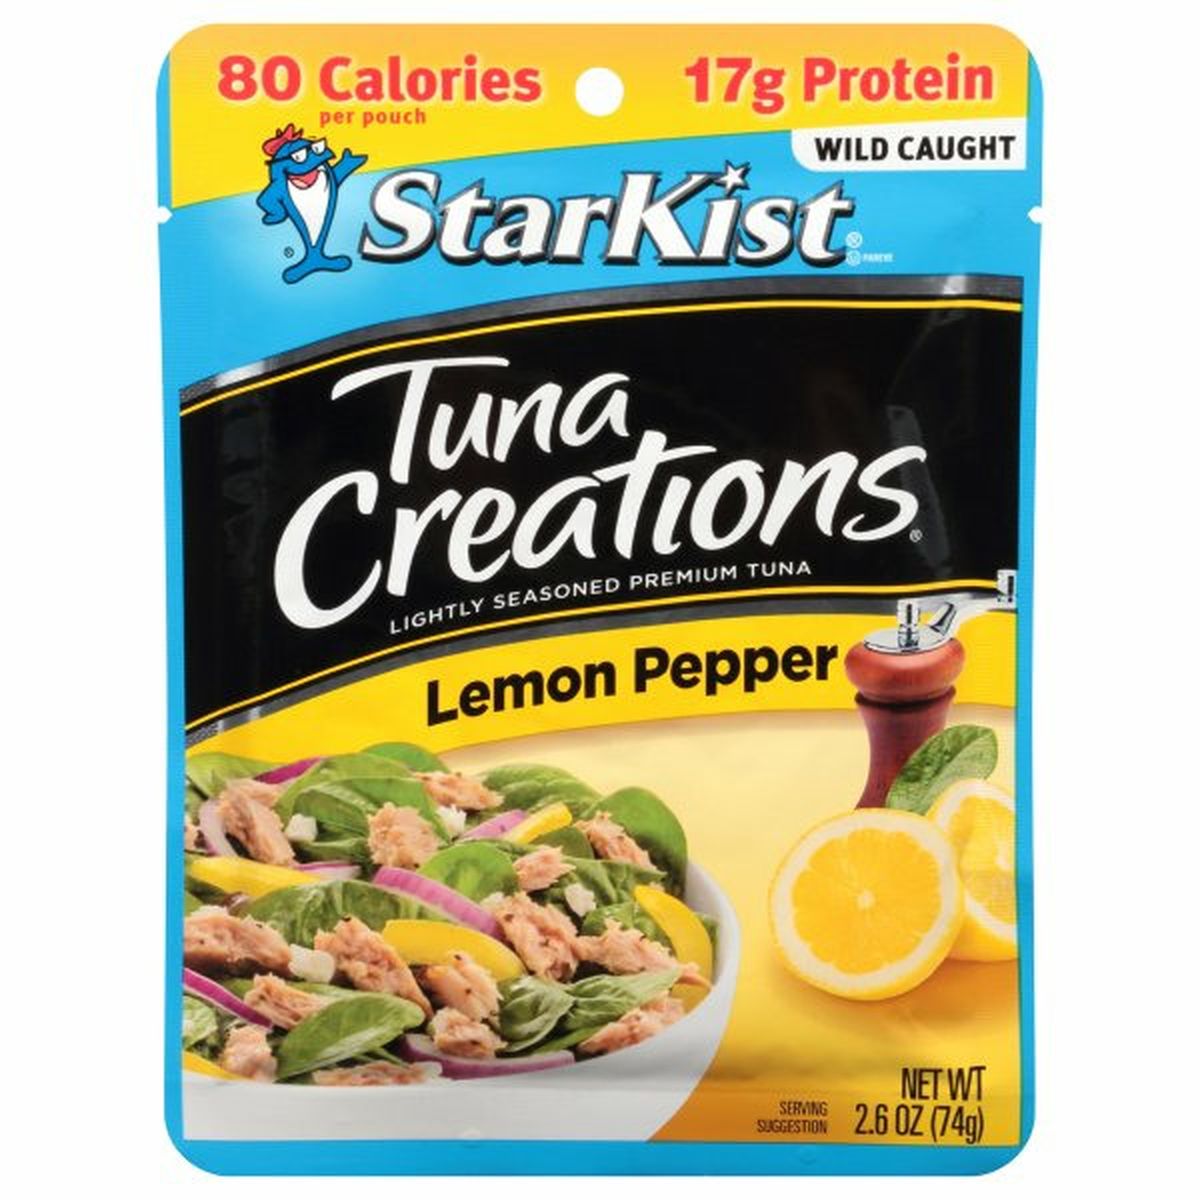 Calories in StarKist Tuna Creations Tuna, Premium, Lemon Pepper, Lightly Seasoned